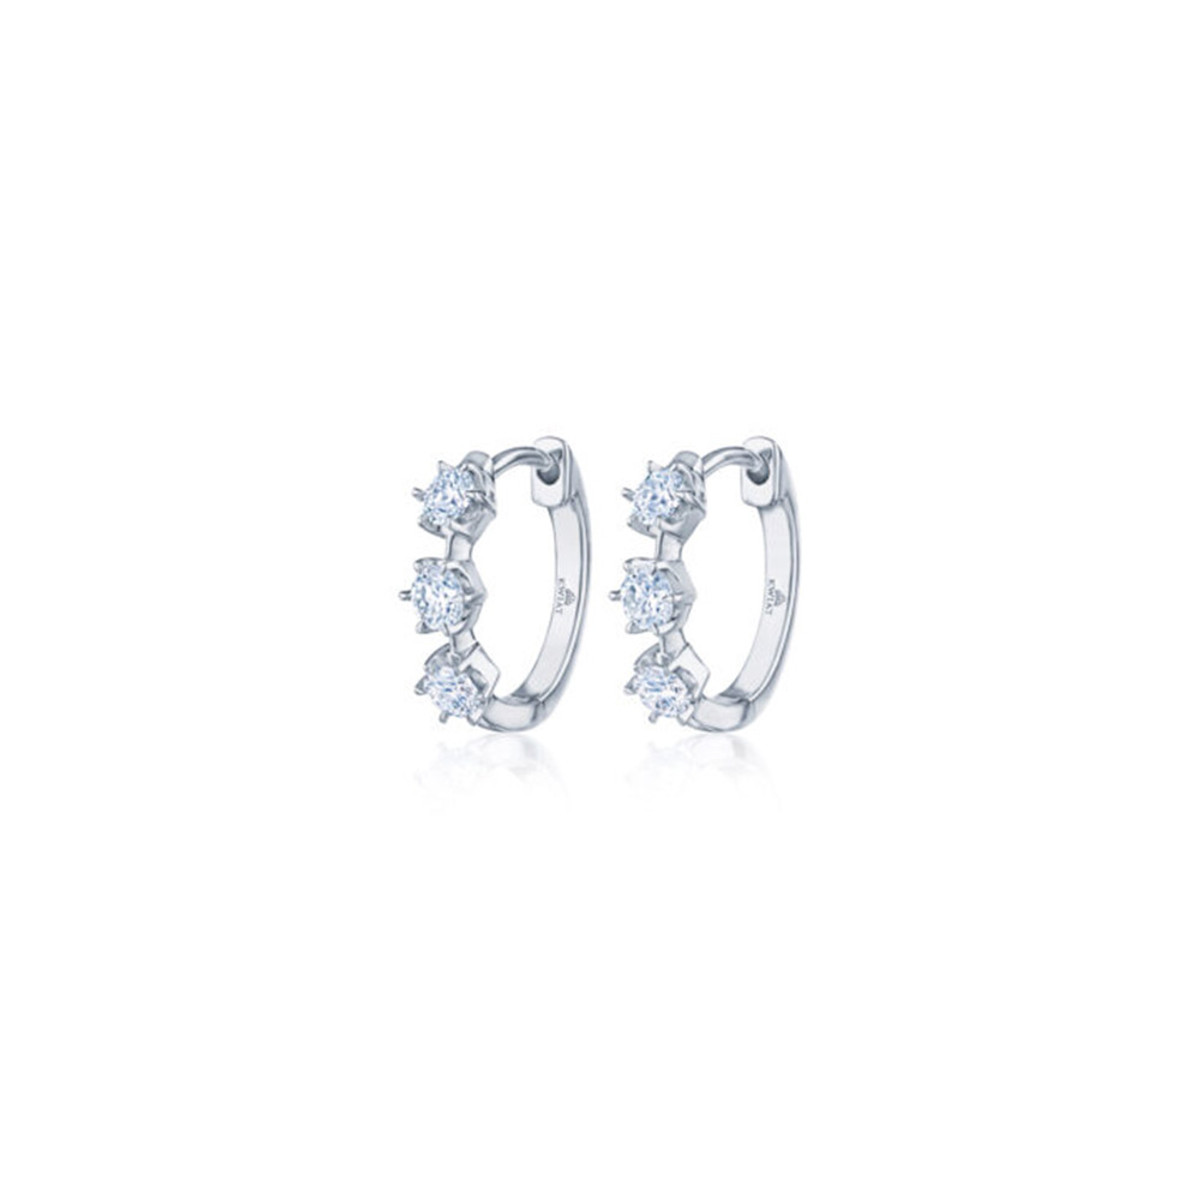 Kwiat 18K White Gold Petite Hoop Earrings with Diamonds-51830 Product Image